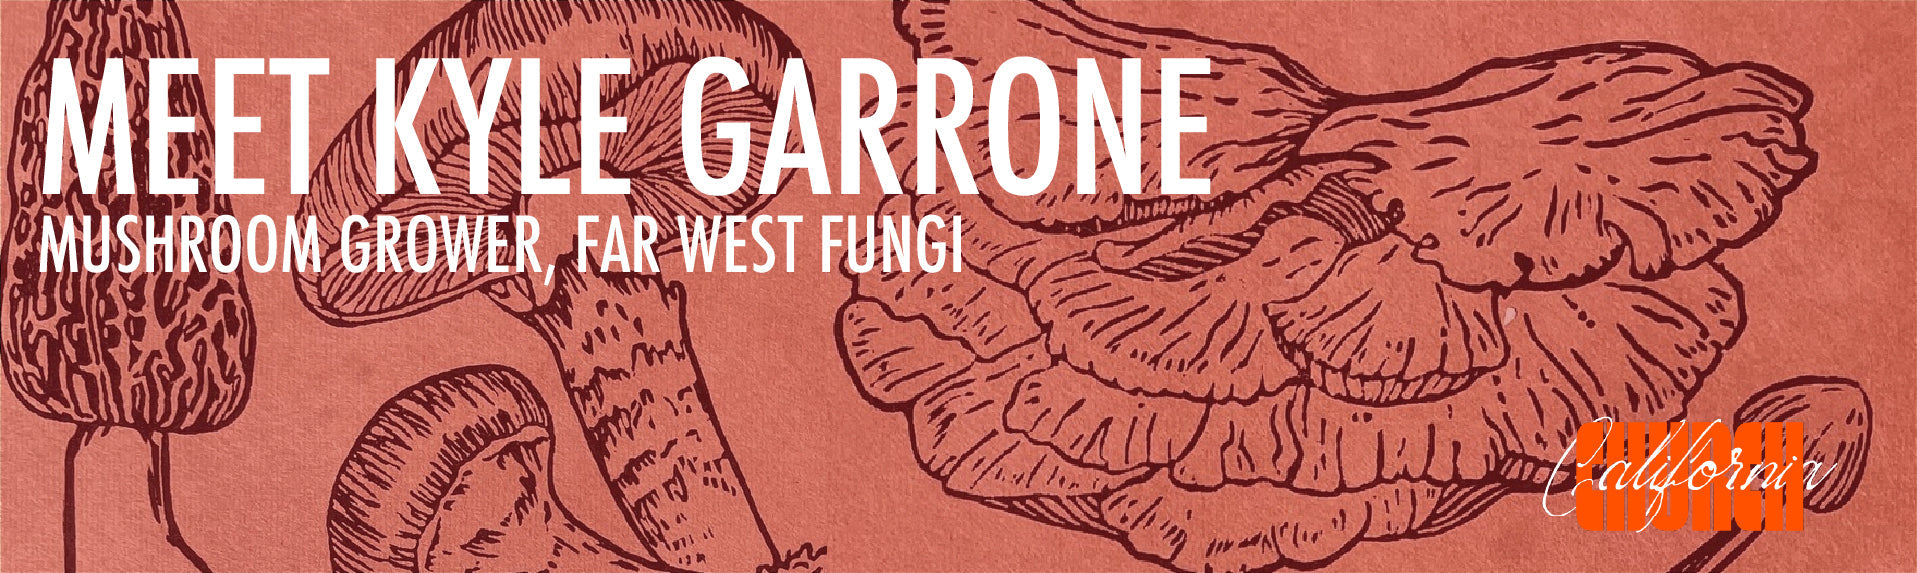 Header for Meet Kyle Garrone from Far West Fungi blog post